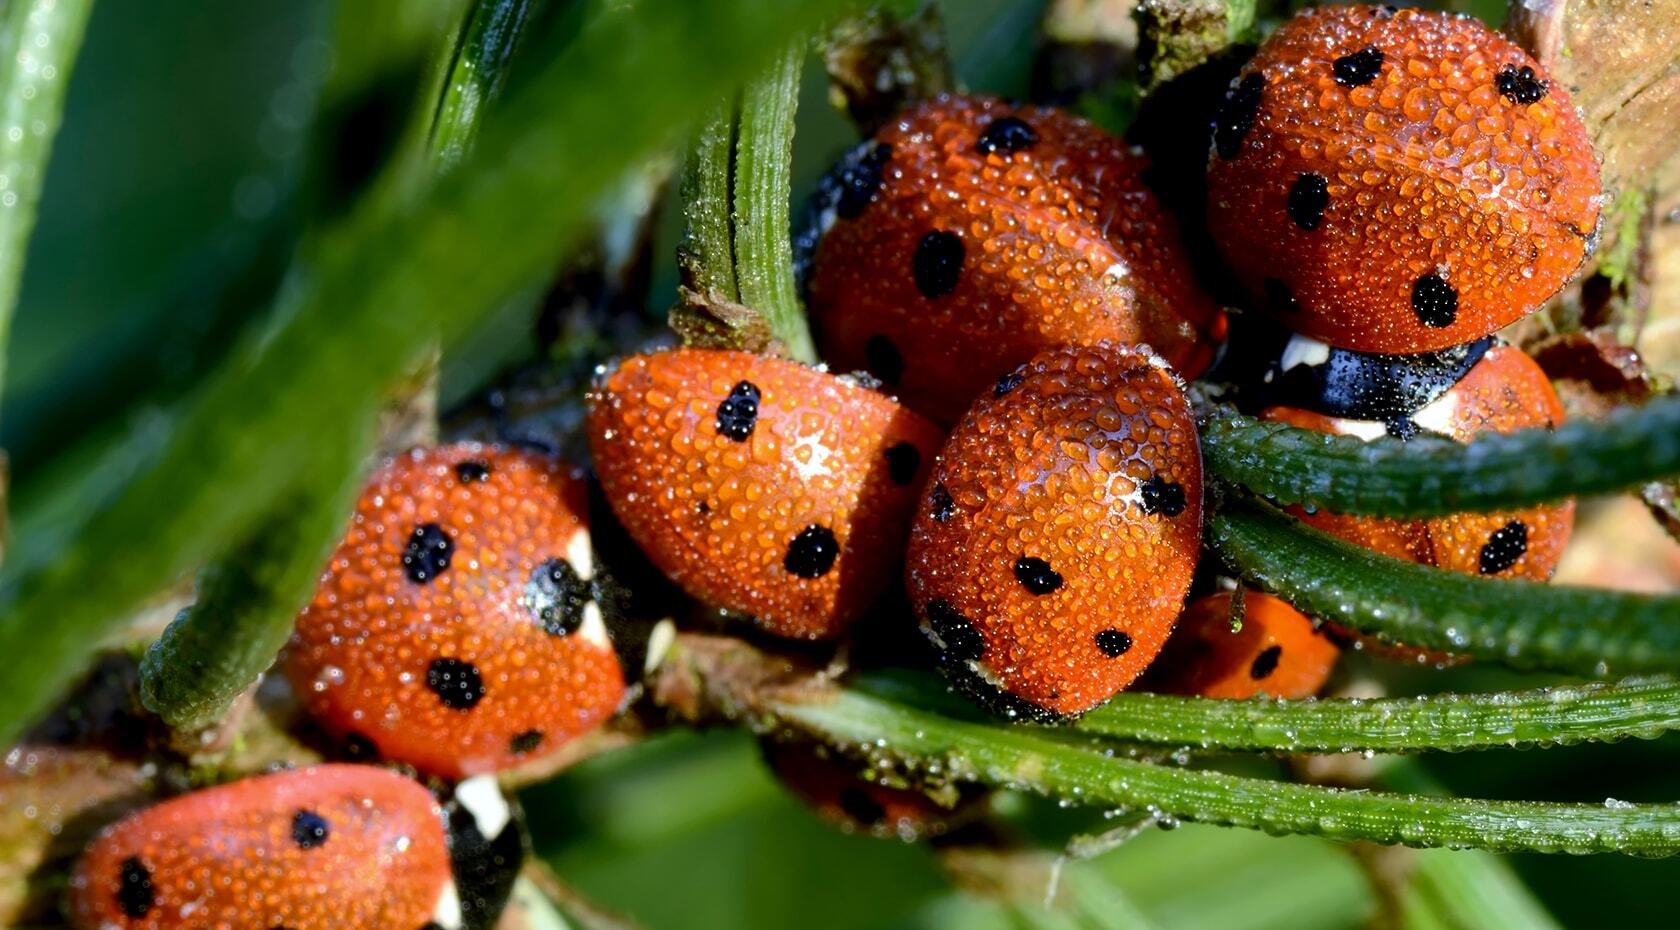 Ladybirds on a plant